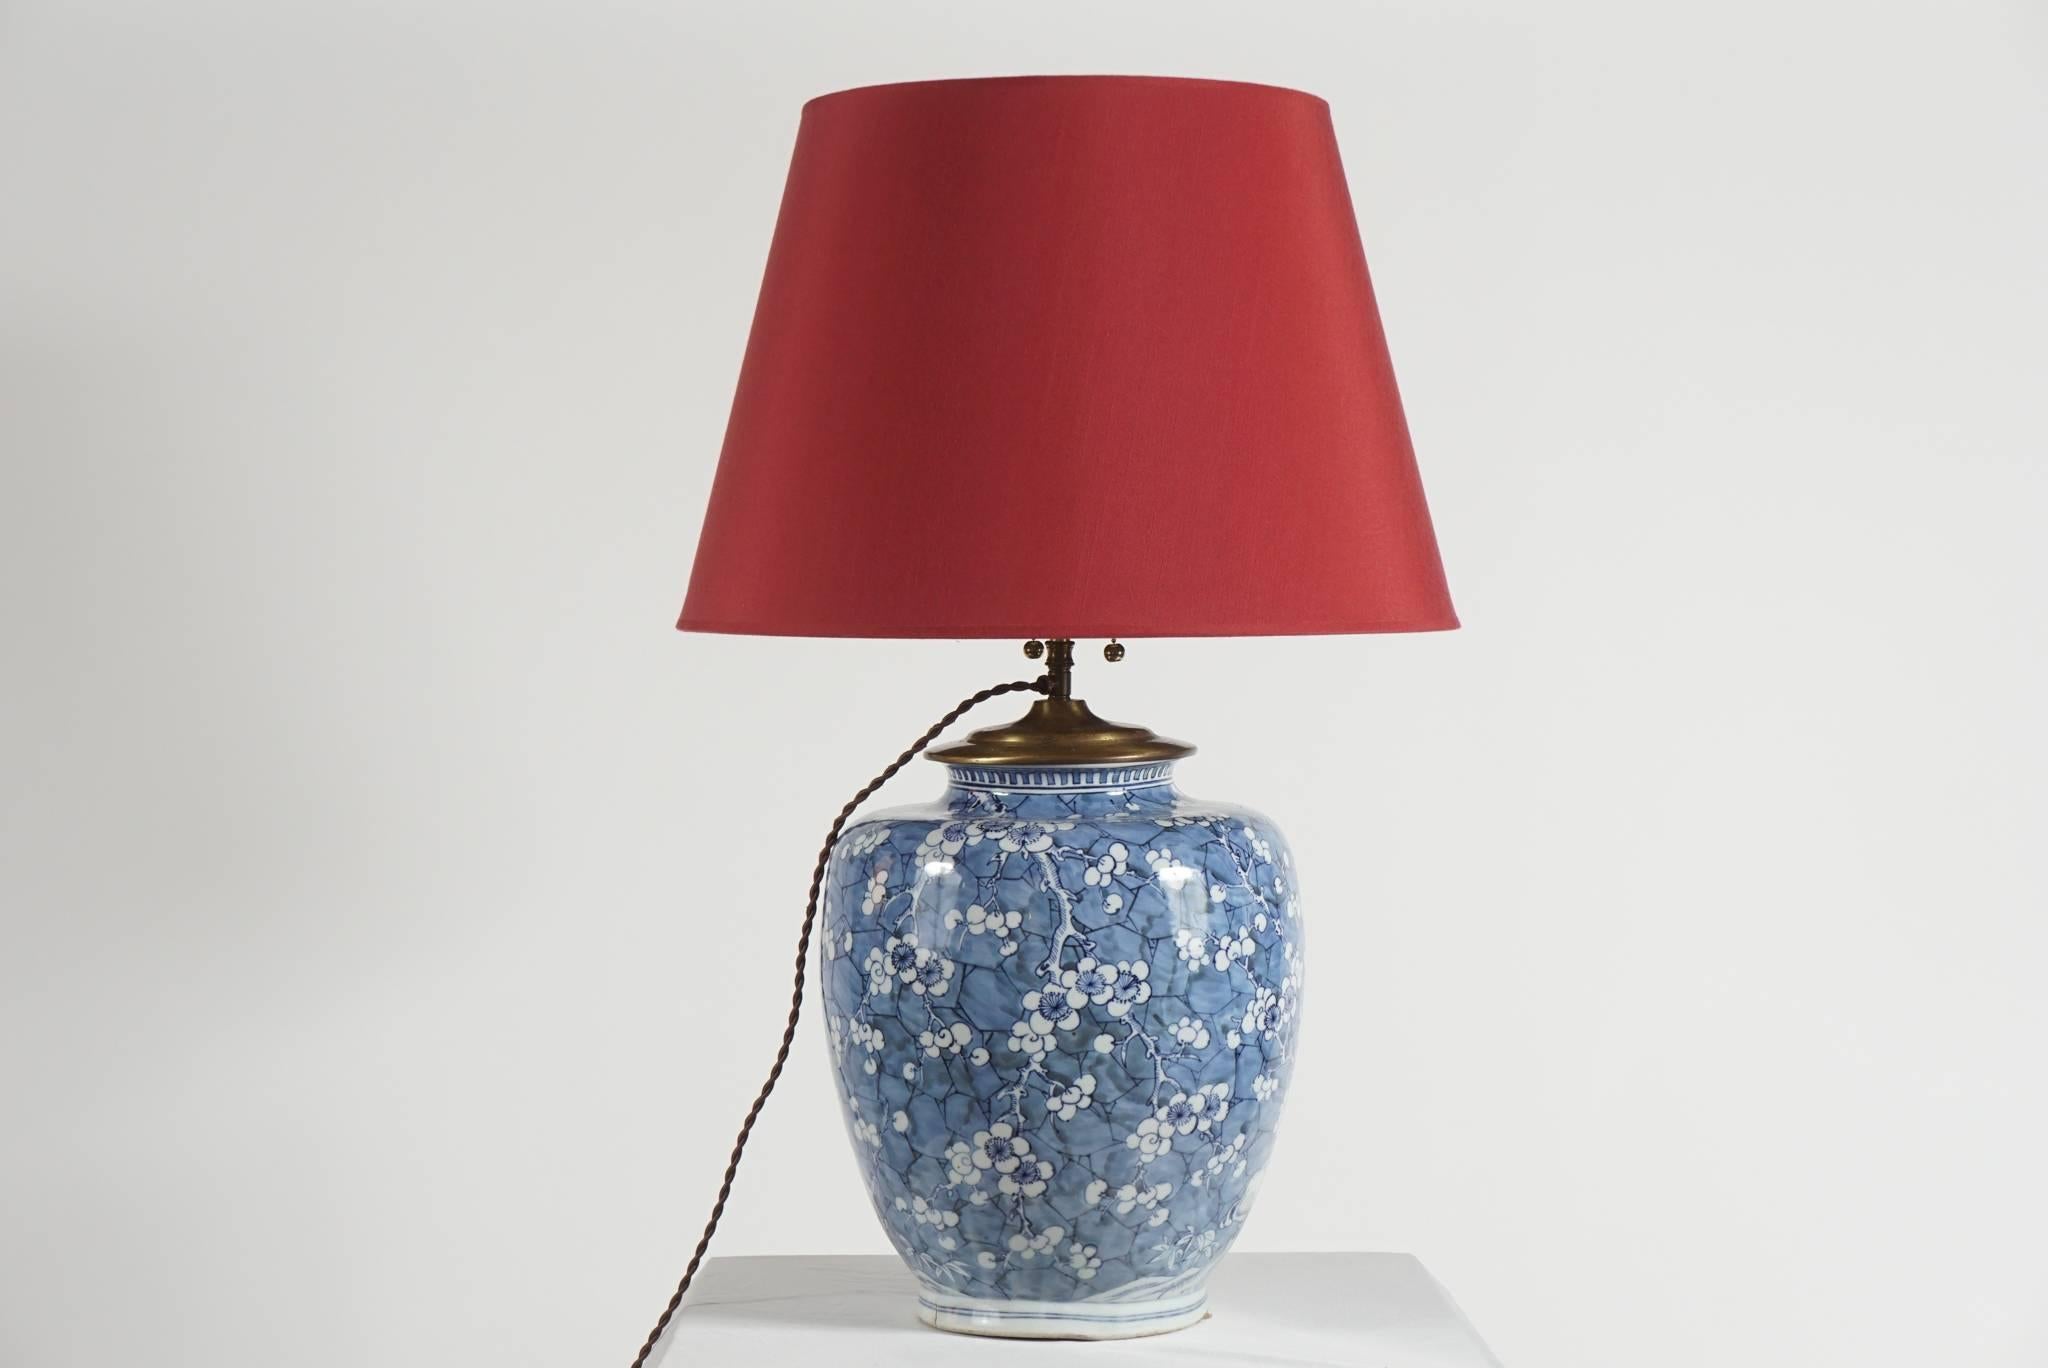 A large, early Chinese Qing Dynasty blue and white porcelain vase of globular form having 